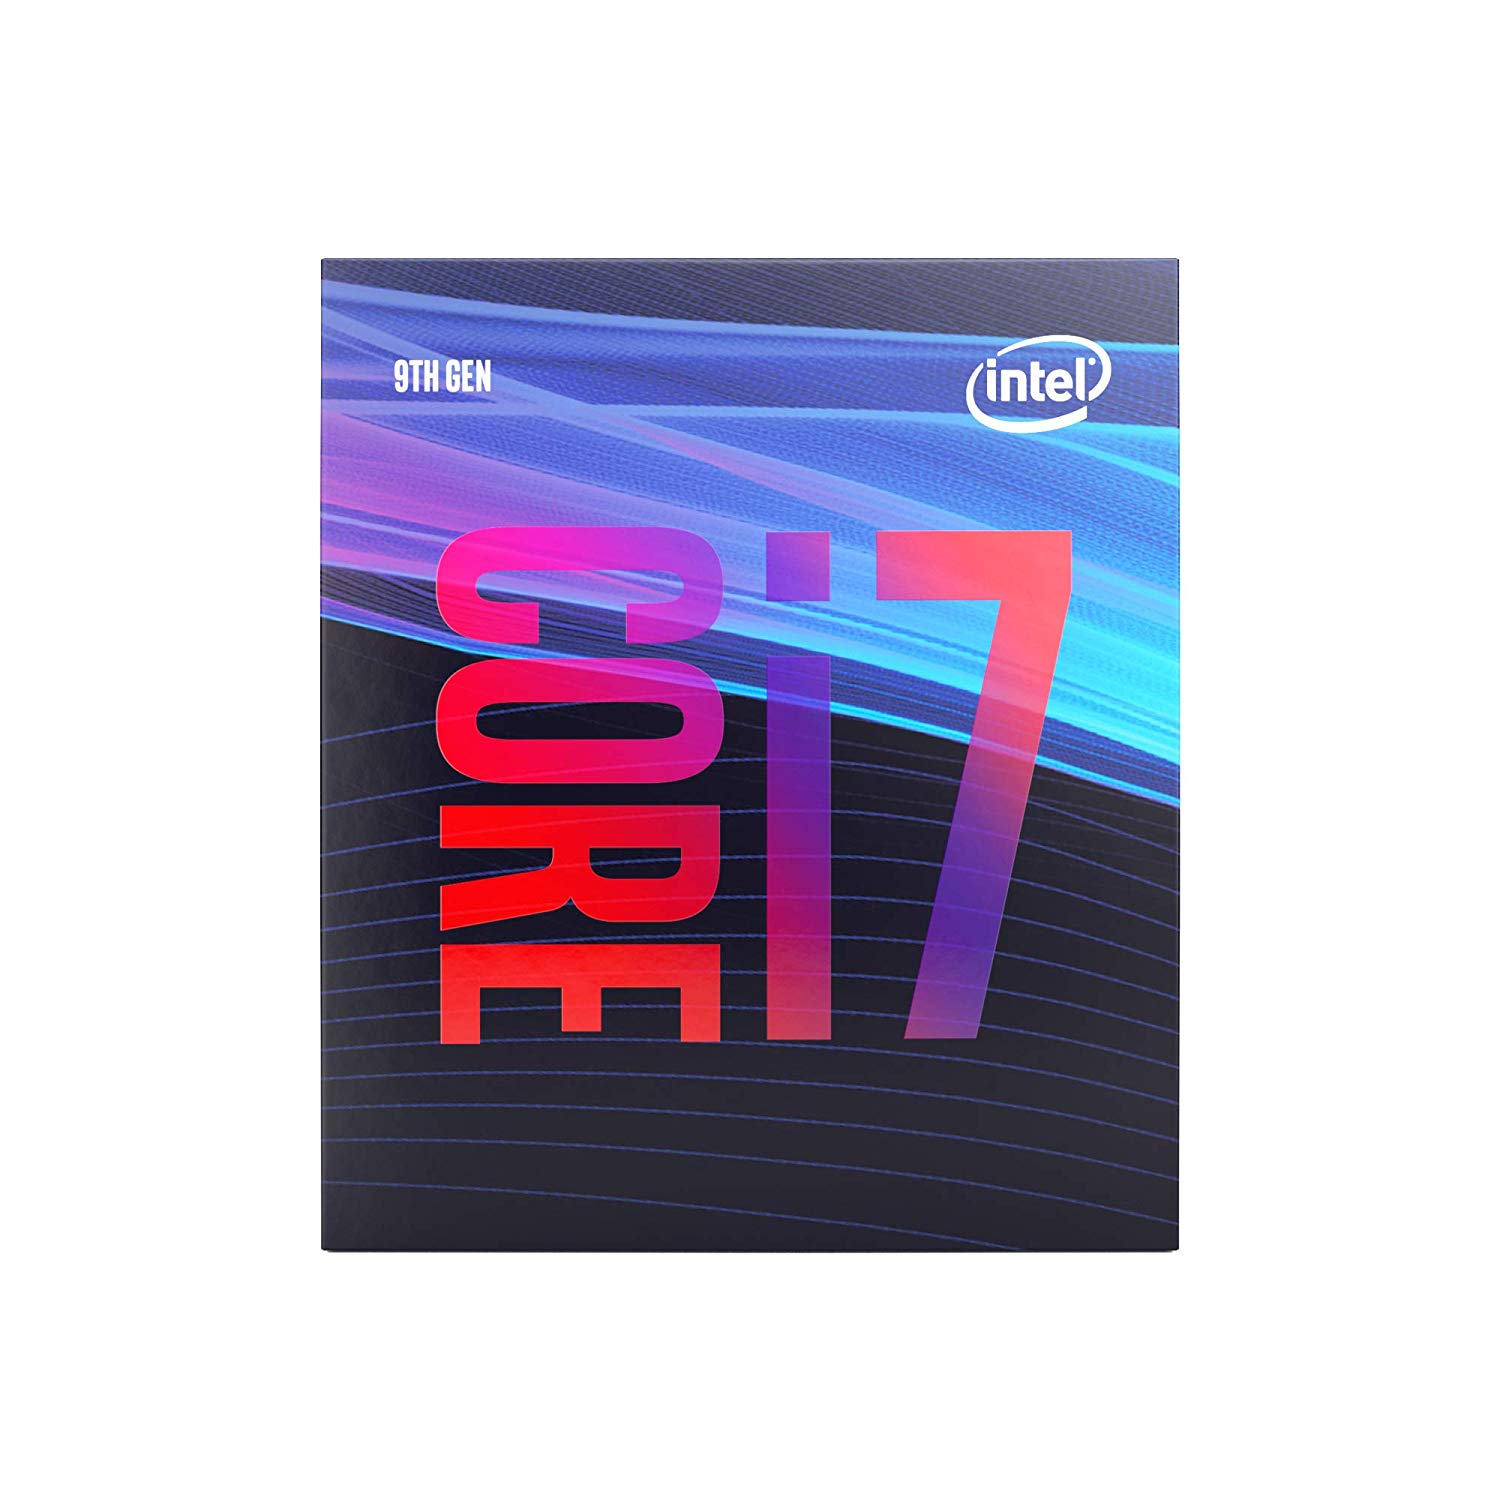 Buy Intel Core i7 9700 Desktop Processor Online in Kuwait, Best Price